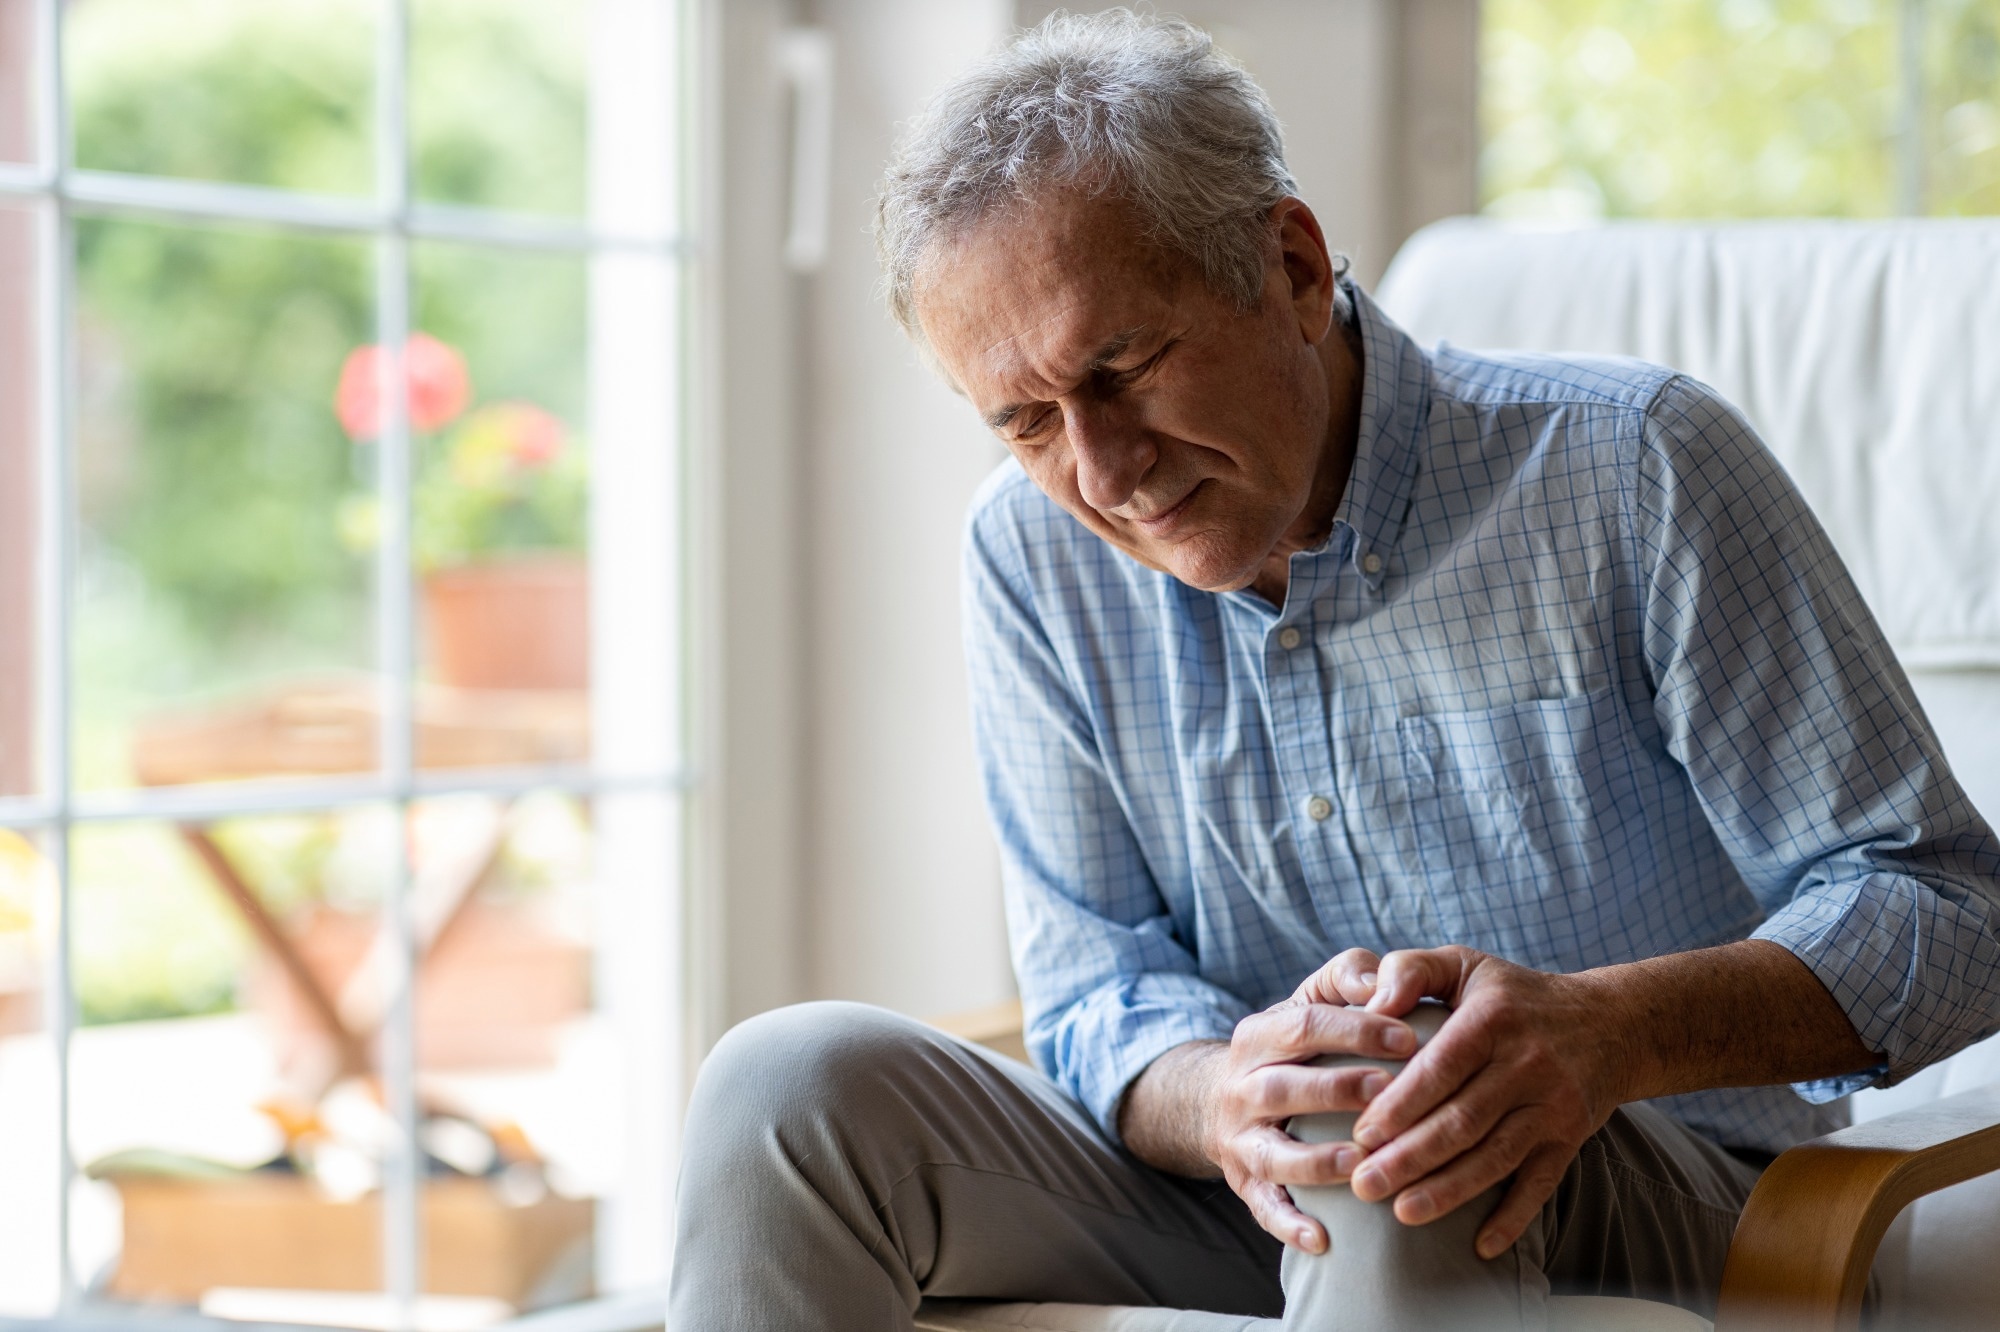 Study: Immune mechanisms of depression in rheumatoid arthritis. Image Credit: pikselstock/Shutterstock.com